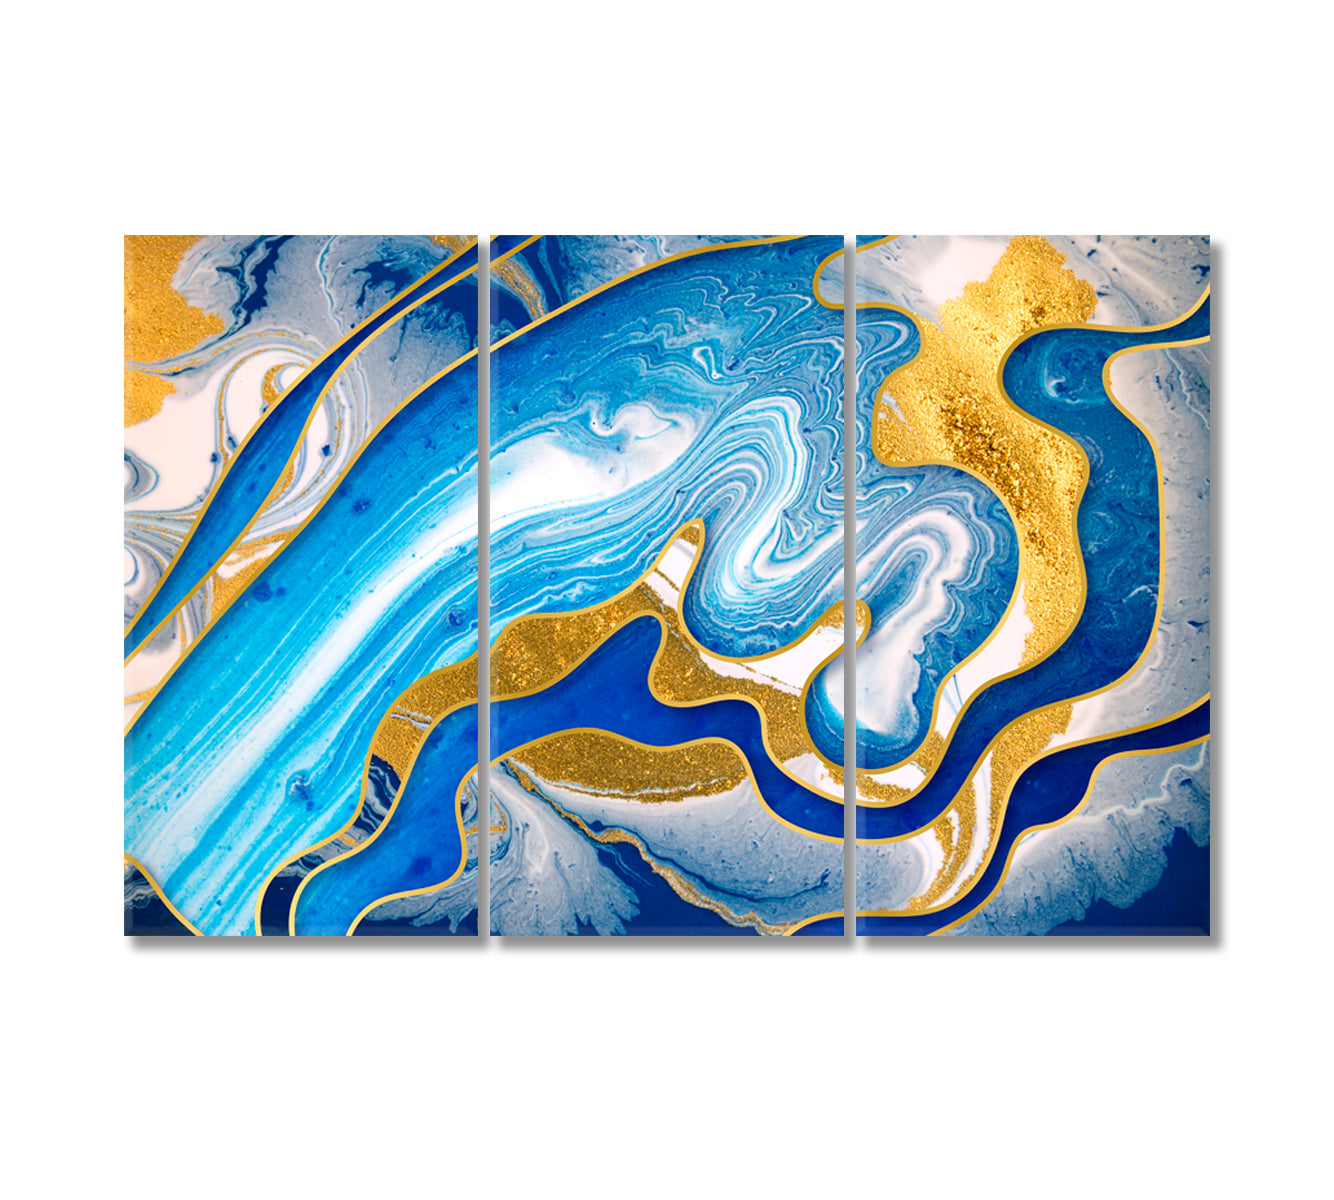 Abstract Modern Blue Yellow Waves Swirls Canvas Print-Canvas Print-CetArt-3 Panels-36x24 inches-CetArt